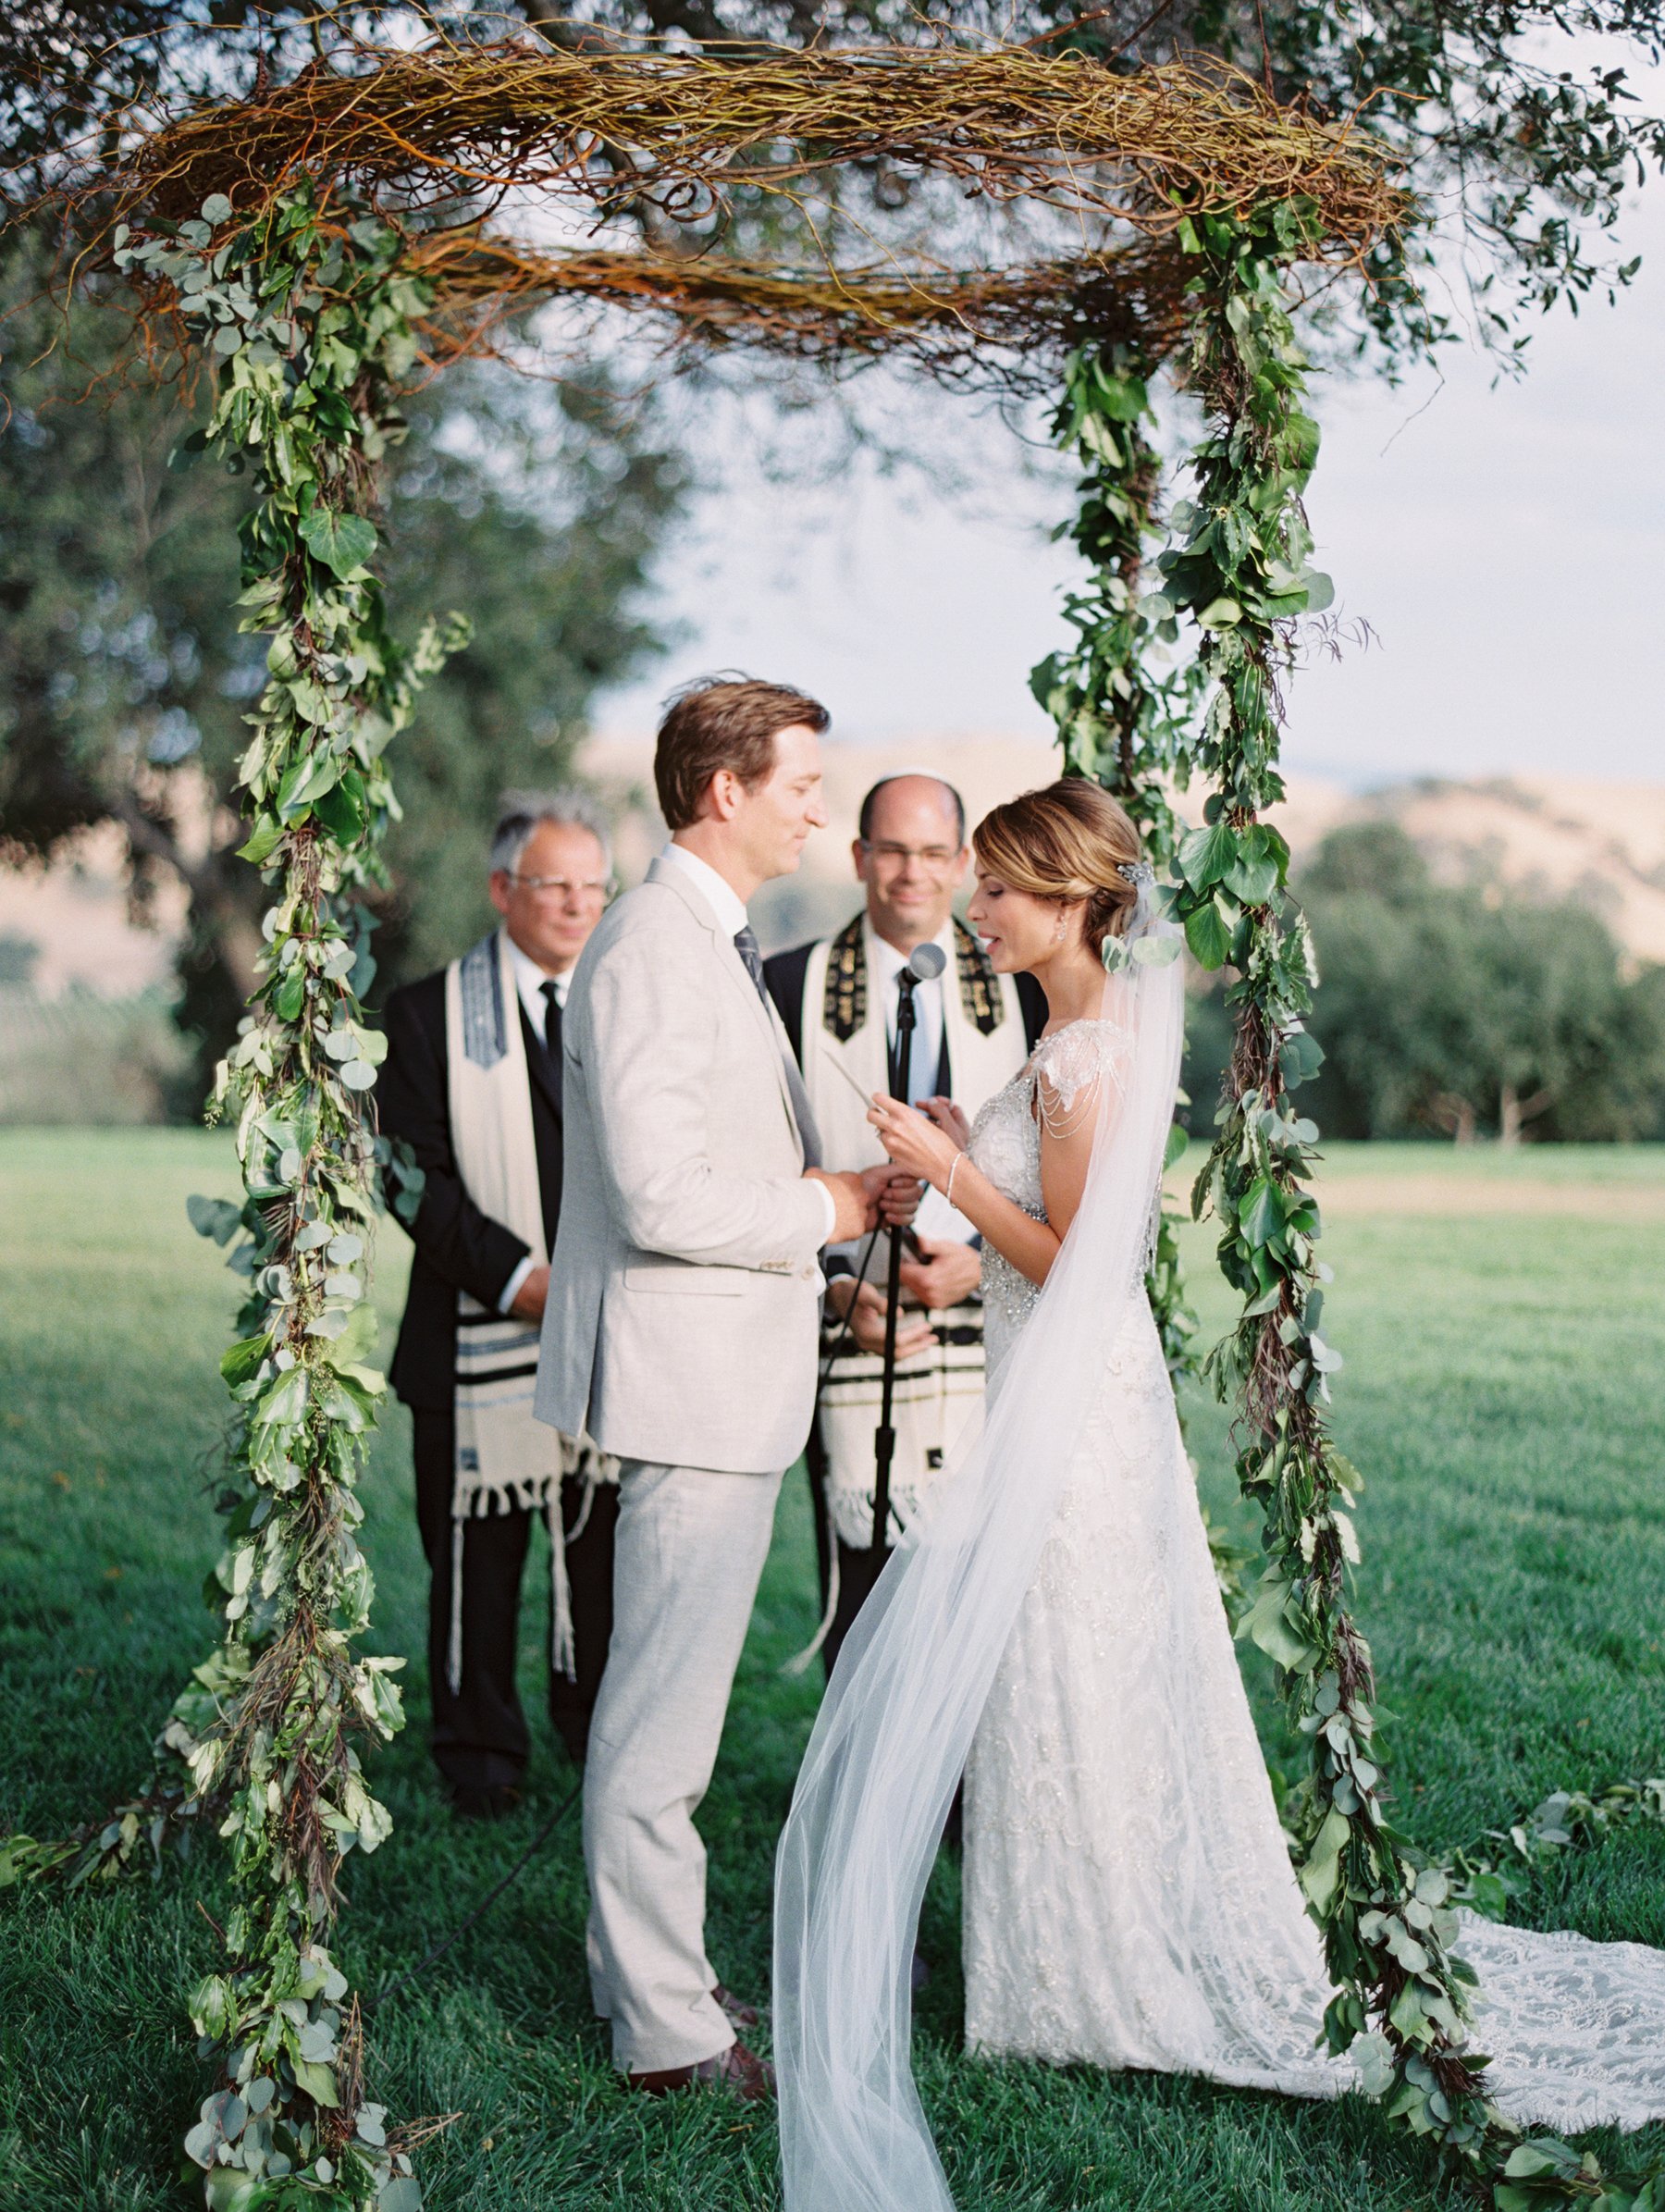 santabarbarwedding.com | Photo: Kurt Boomer | Shades of Gray wedding ideas